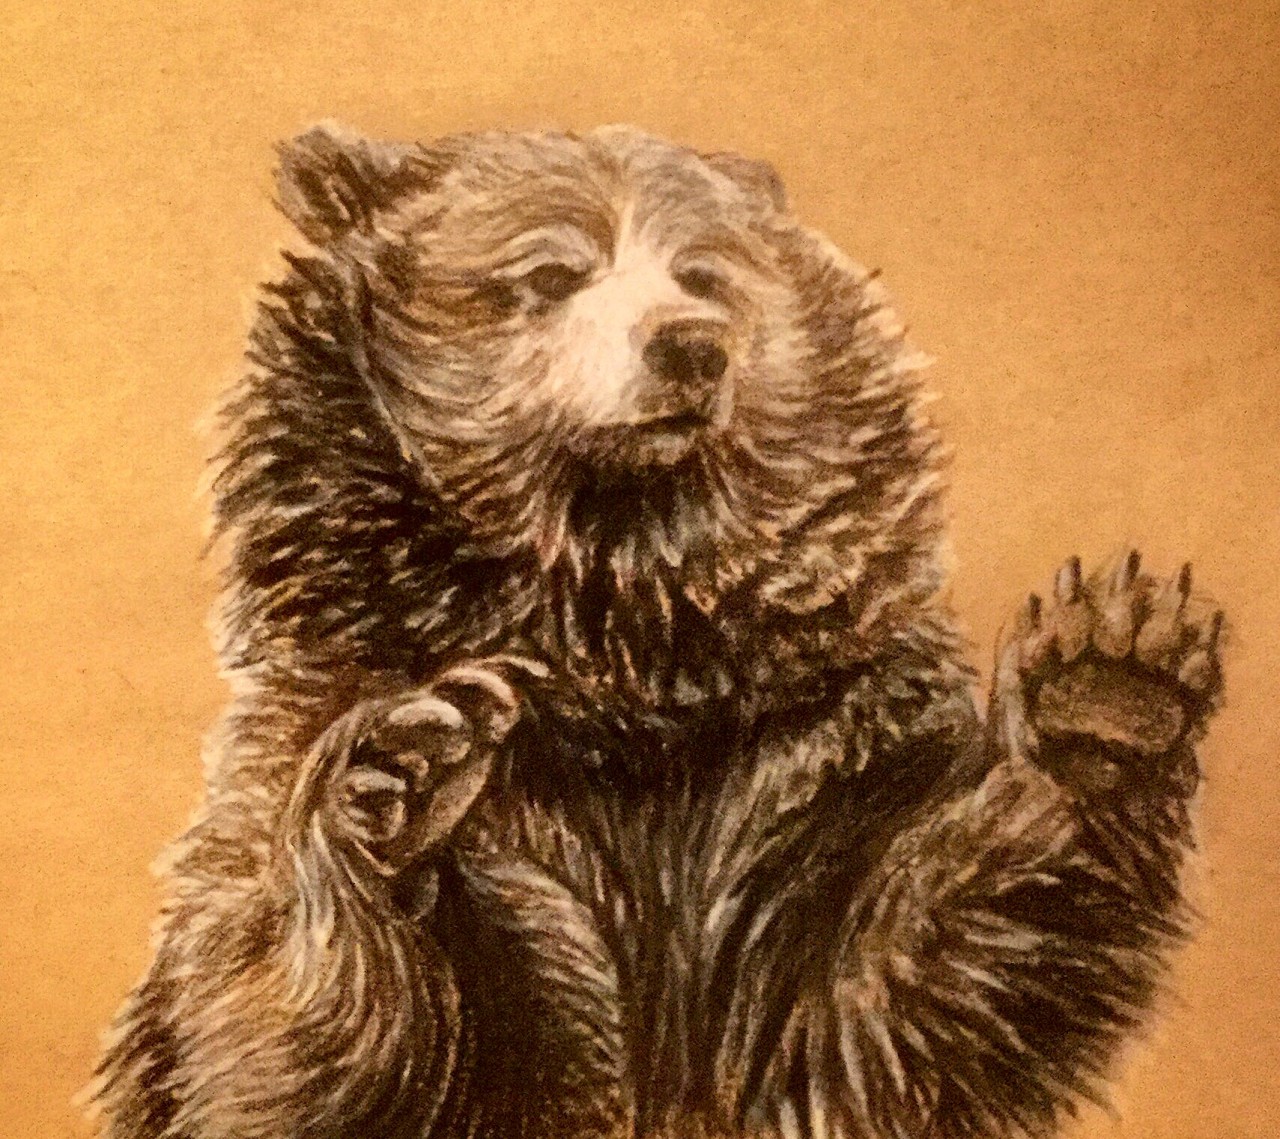 Bear Drawing by Bear-Art-Drawings on DeviantArt